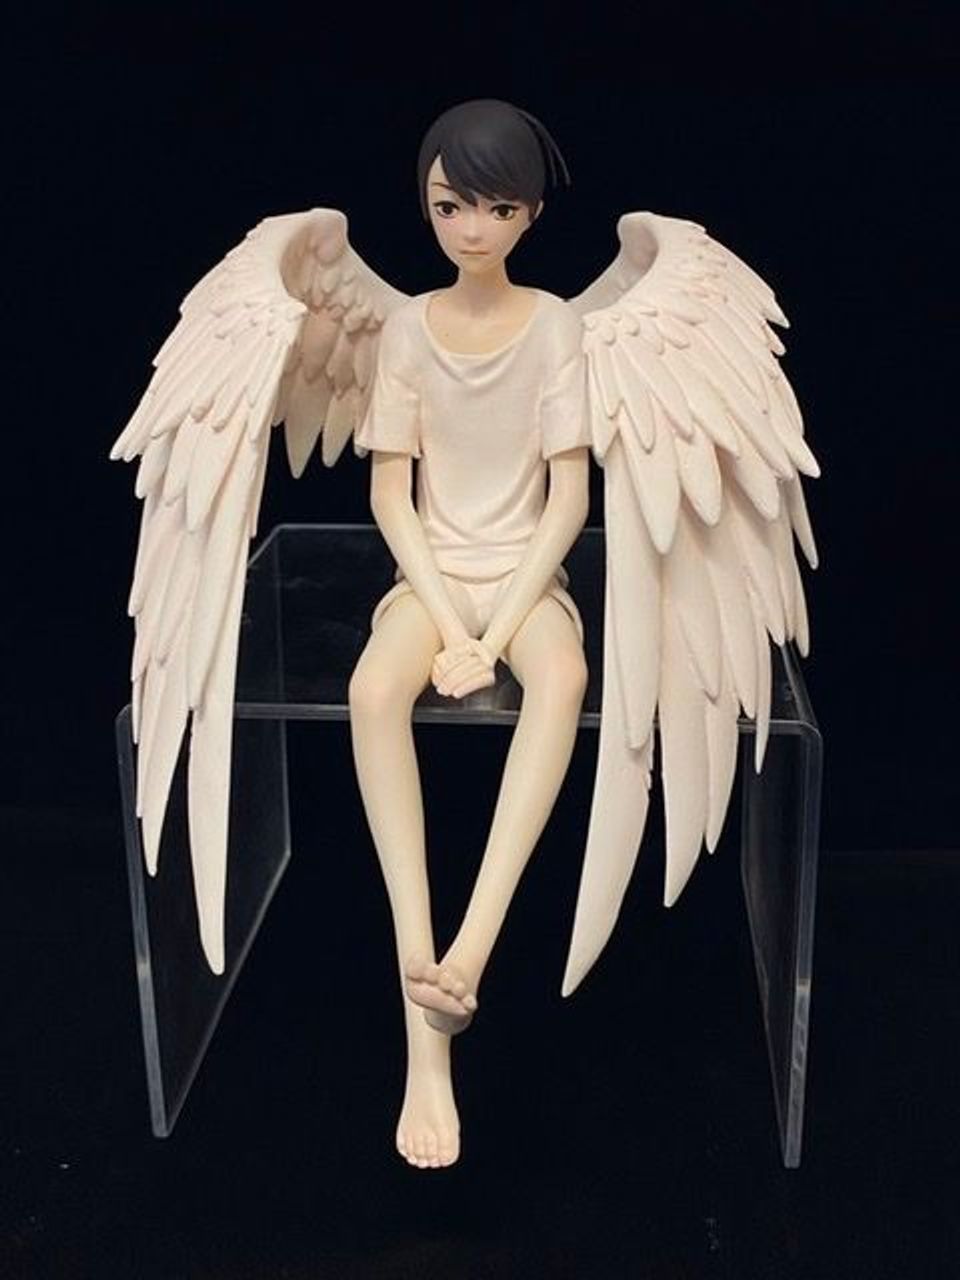 One room angel figure